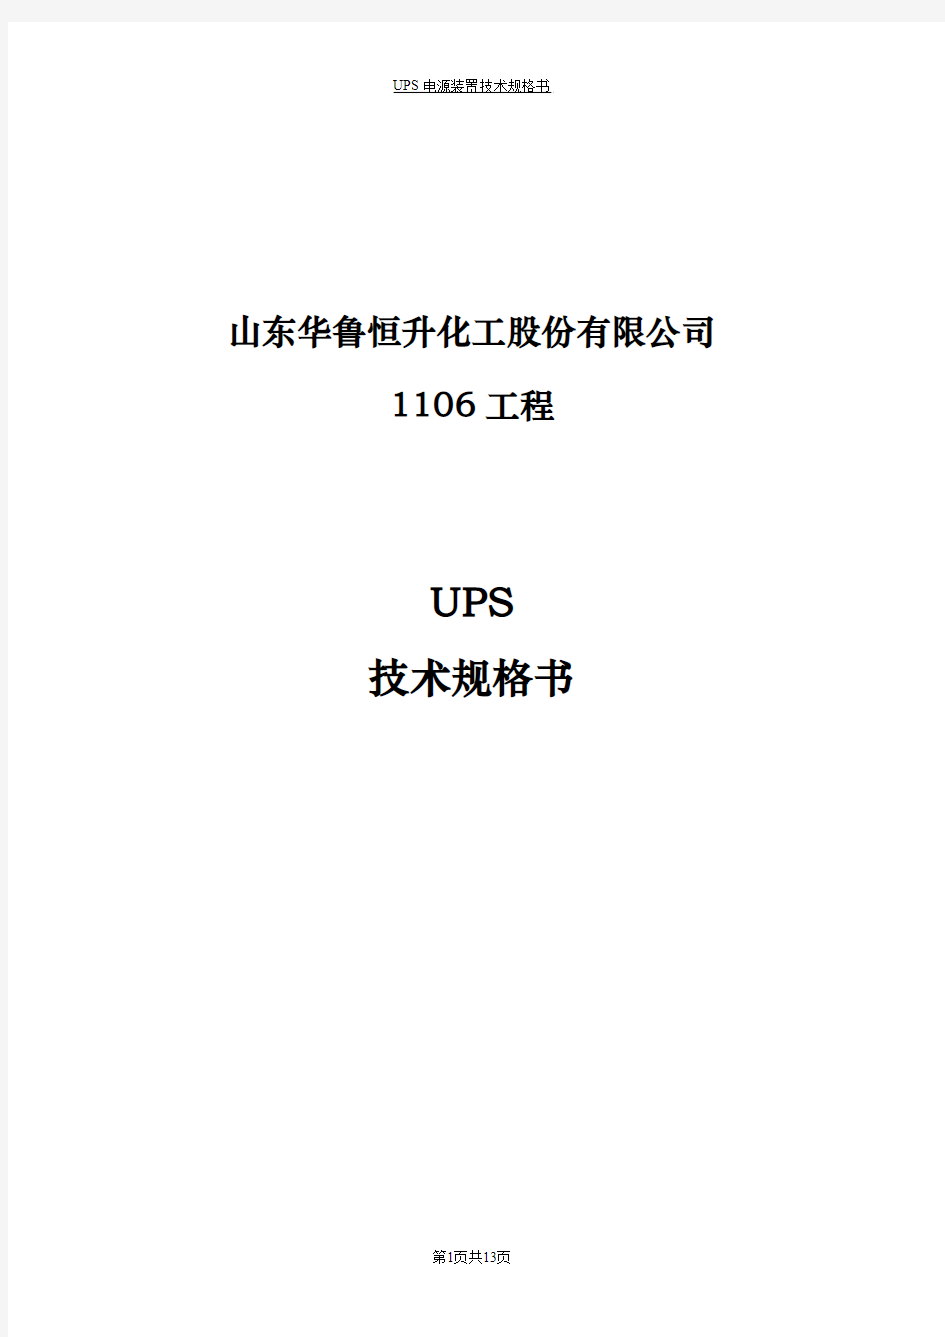 30KVA-UPS电源技术规格书